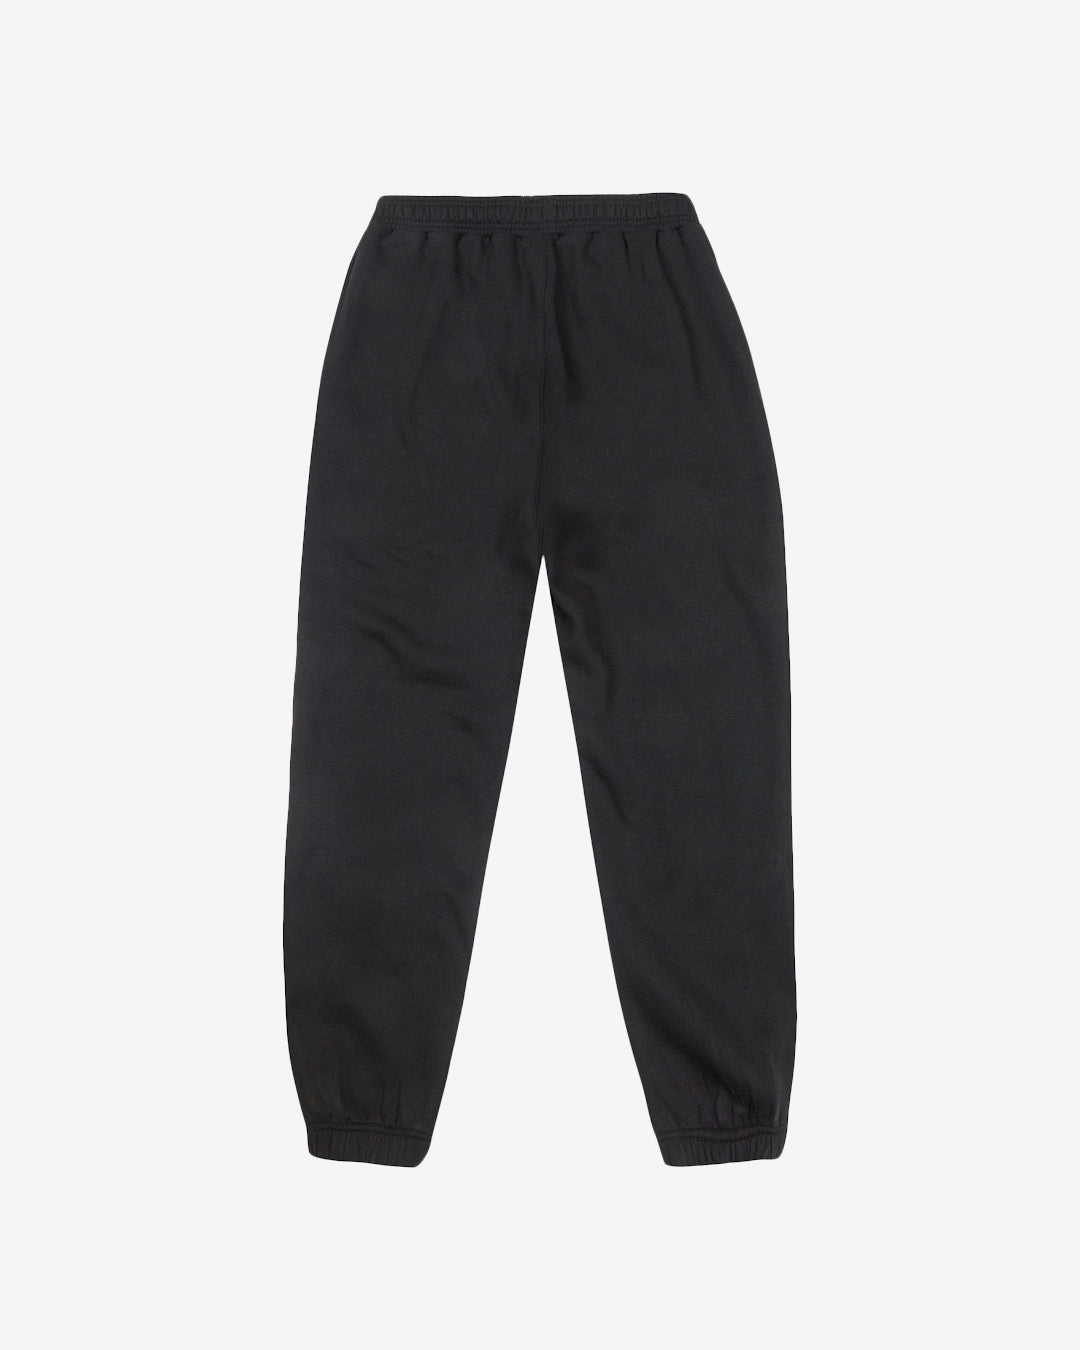 PFC: 002-4 - Men's Sweatpants - Onyx Black